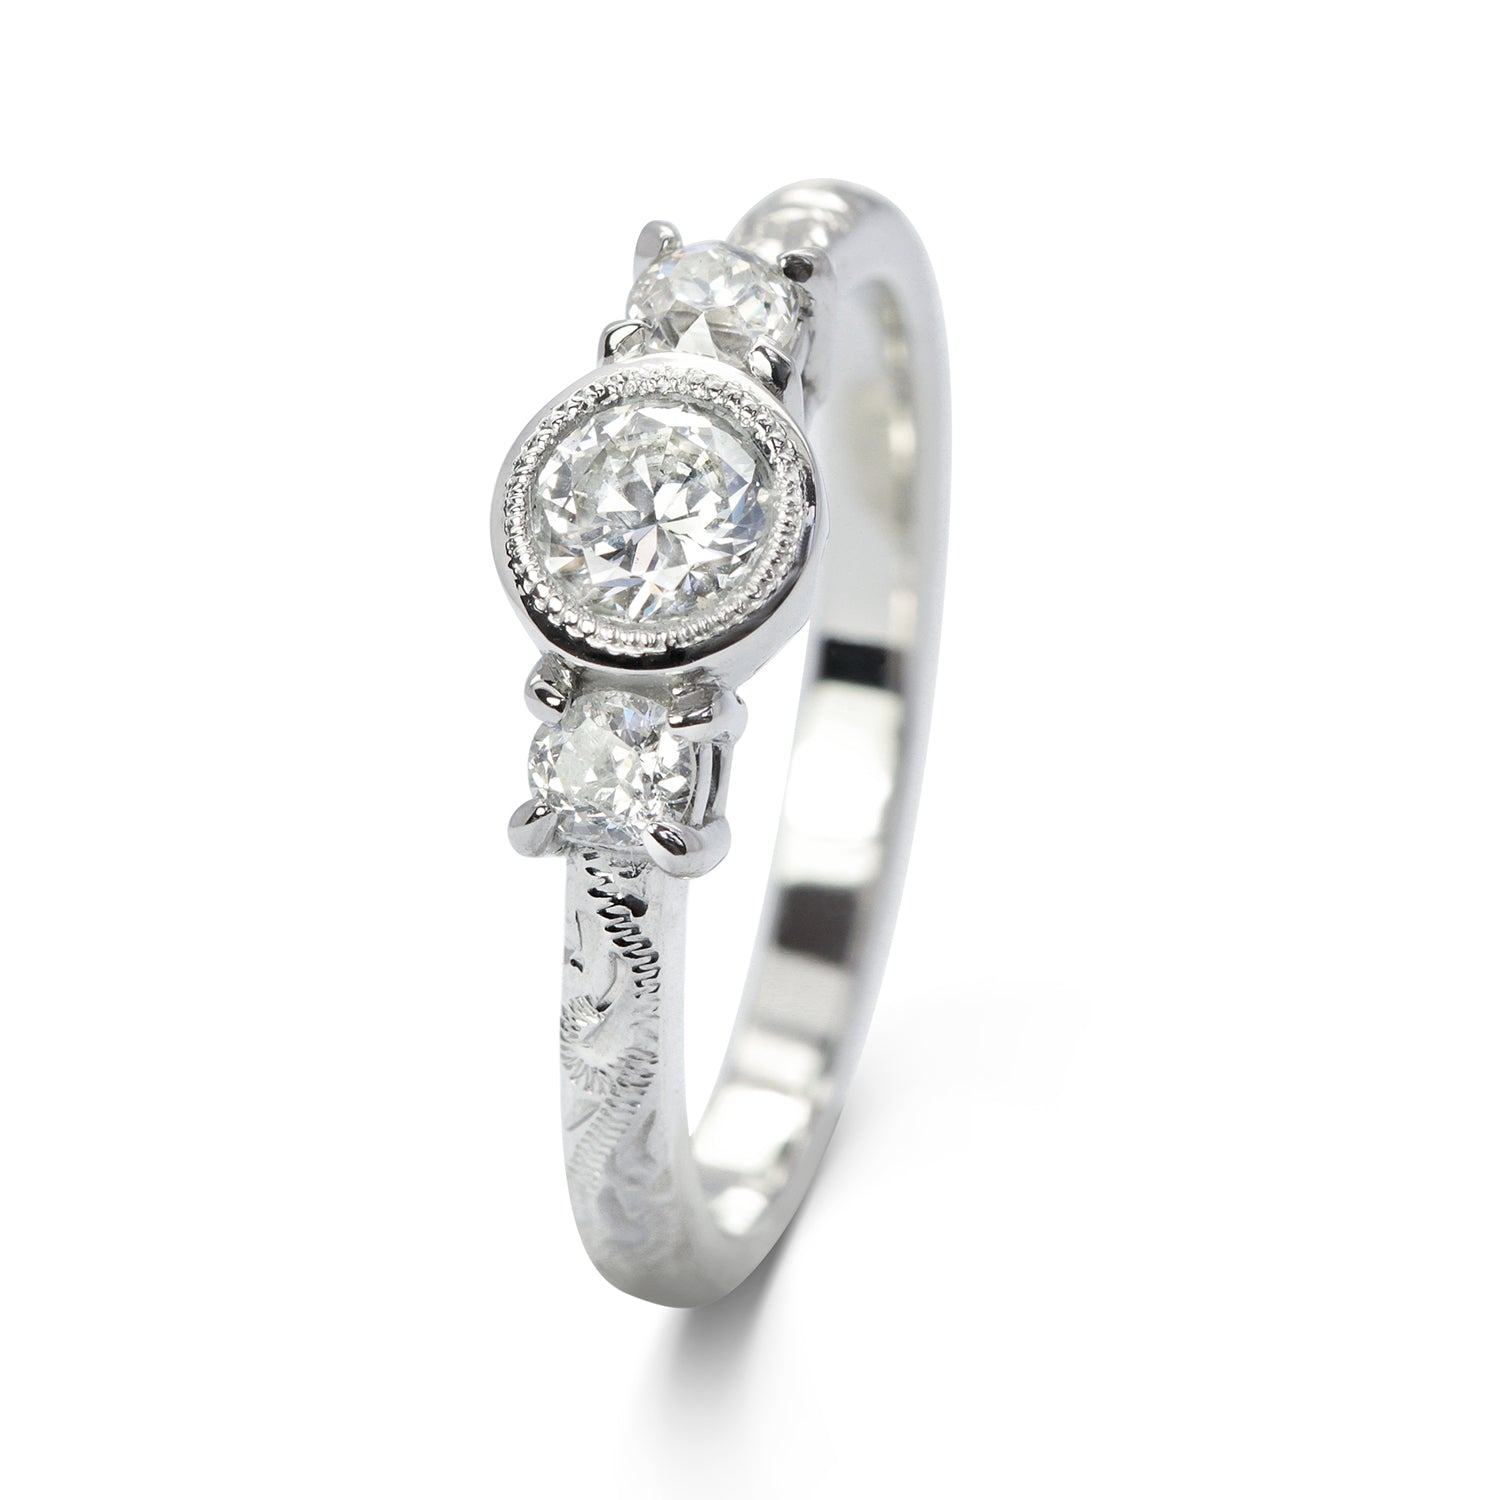 Bespoke Mark Recycled Diamond Trilogy Engagement Ring